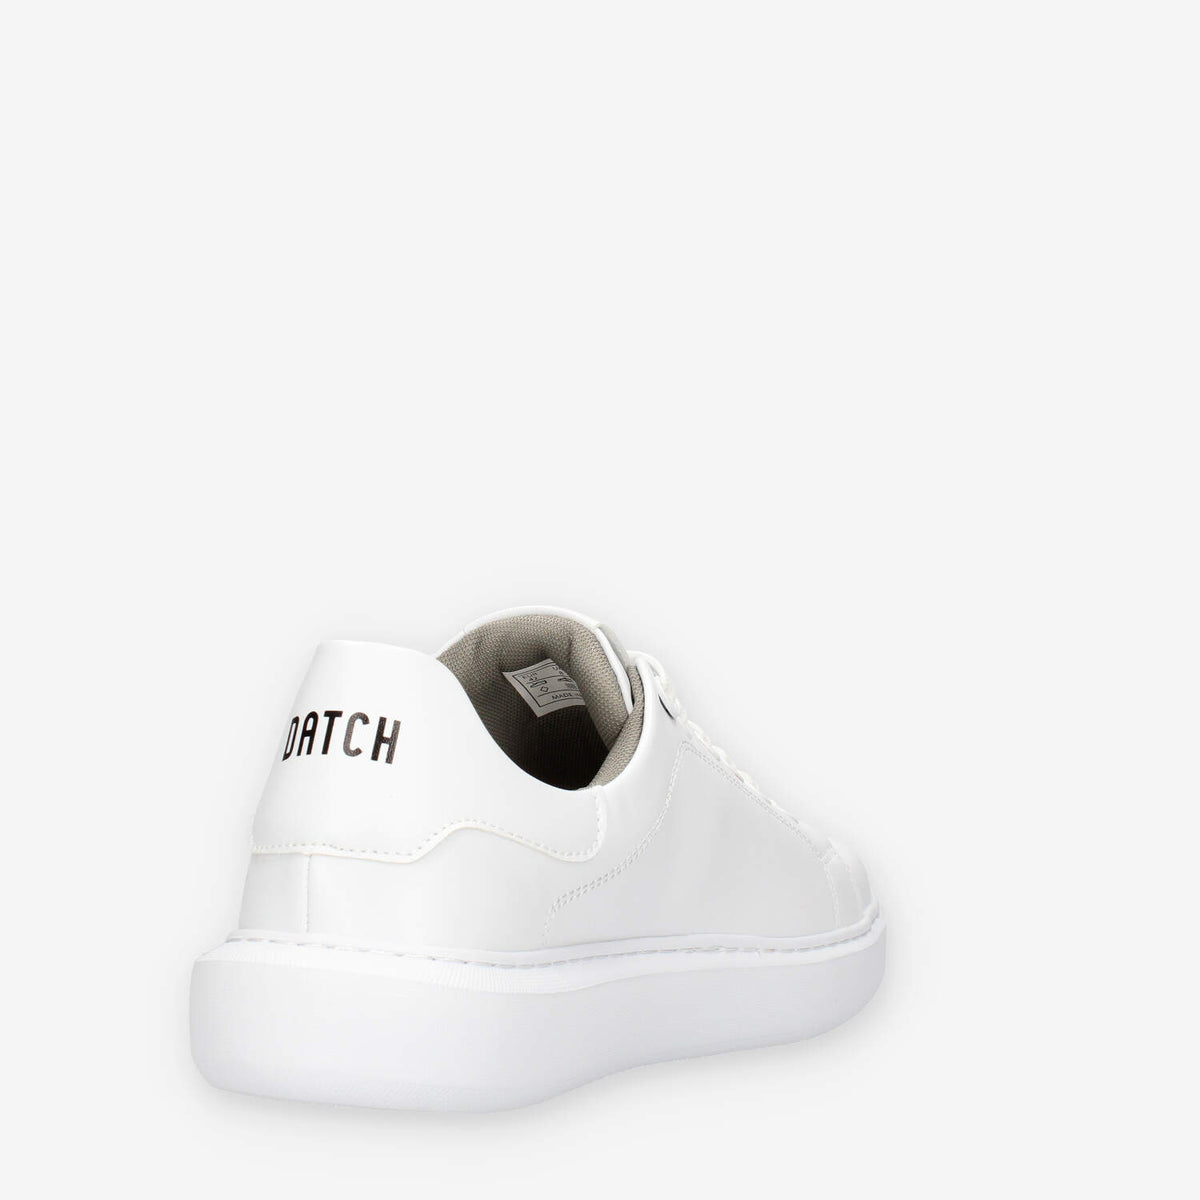 Datch Sneakers da uomo bianche